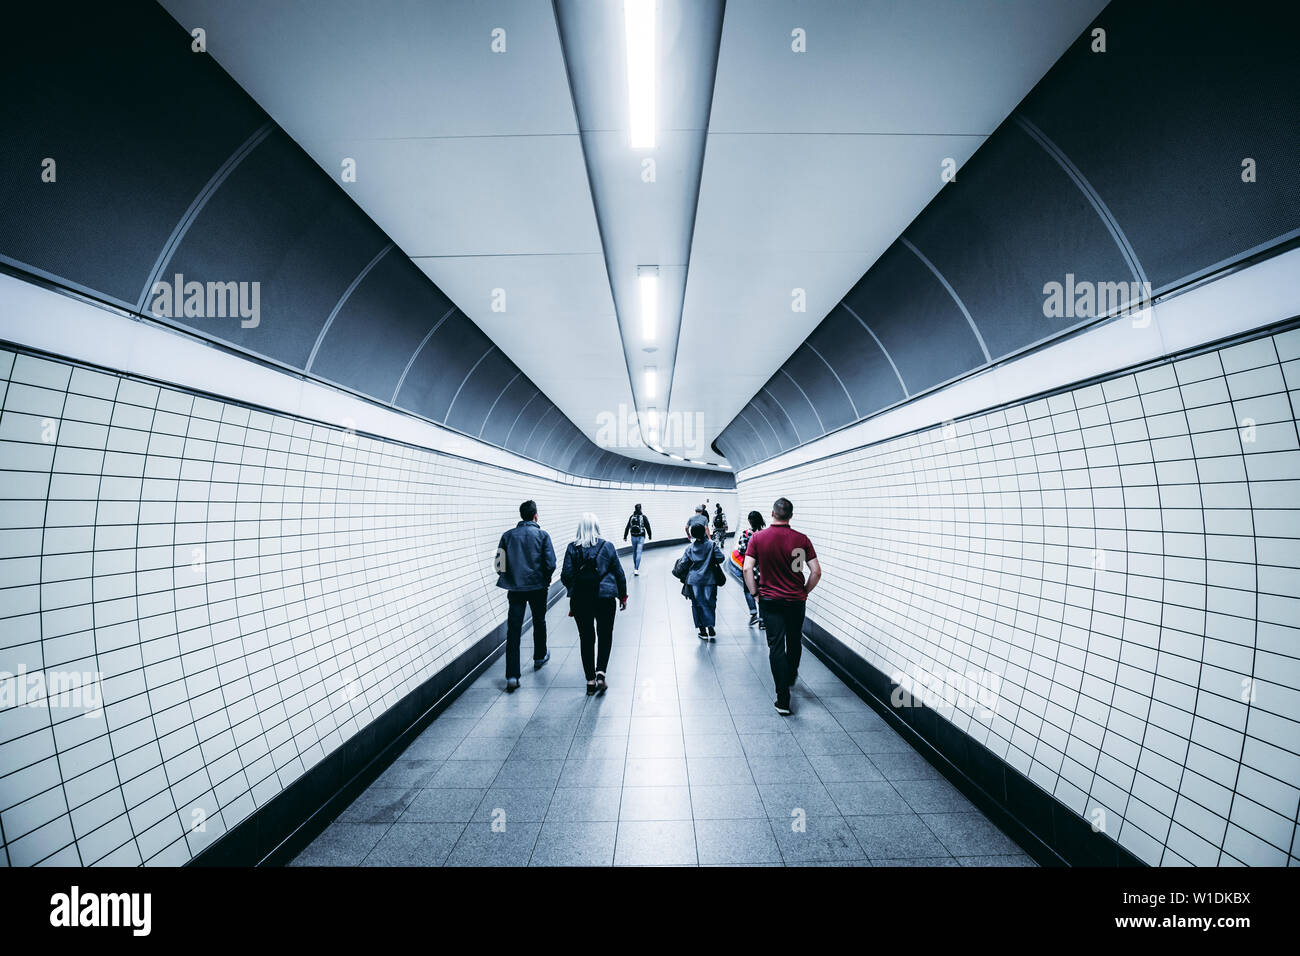 LONDON - JUNE 26, 2019: People walking in modern city tunnel on London Underground crossrail tube train station Stock Photo